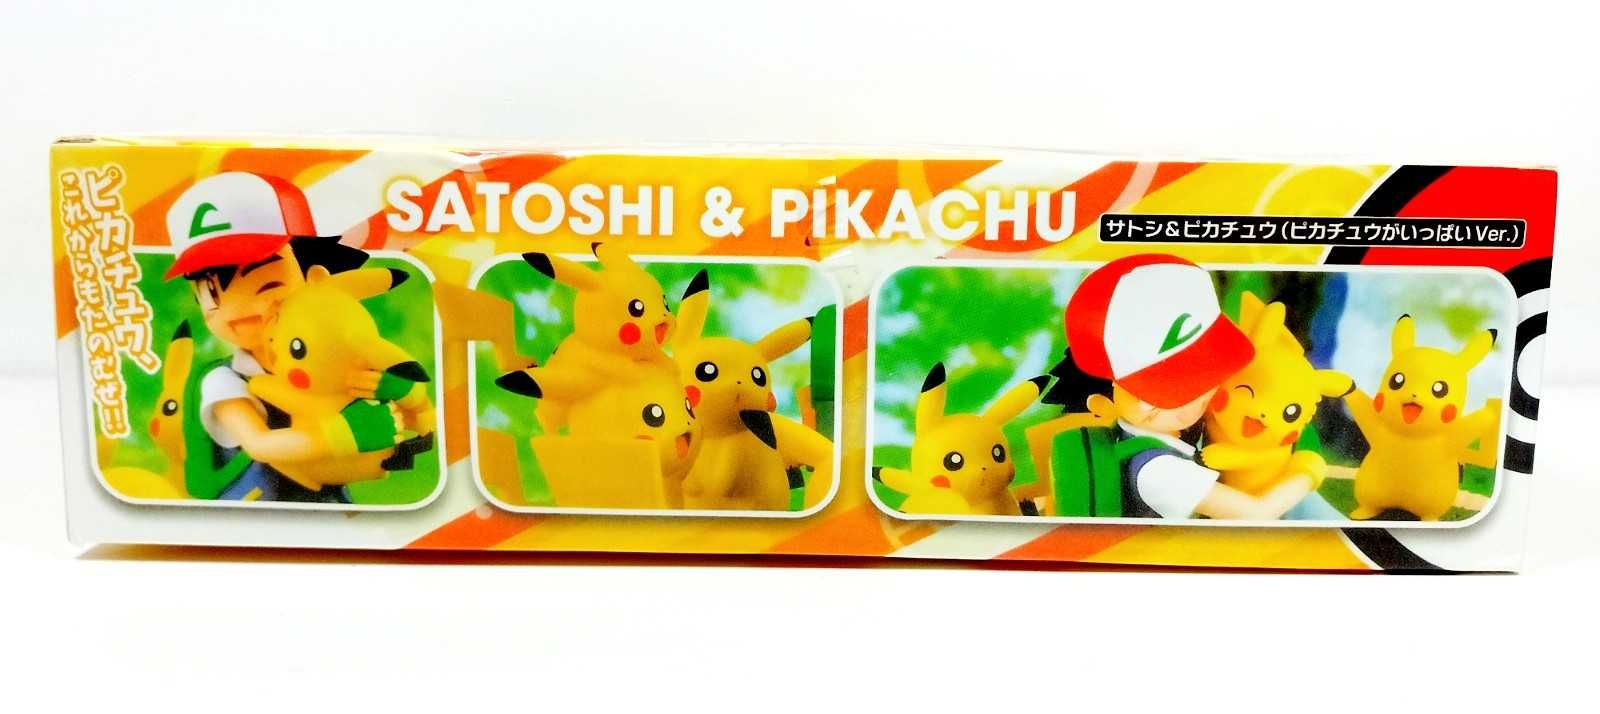 POKEMON - Megahouse Seria G.E.M. Satoshi & Pikachu Pocket Monster